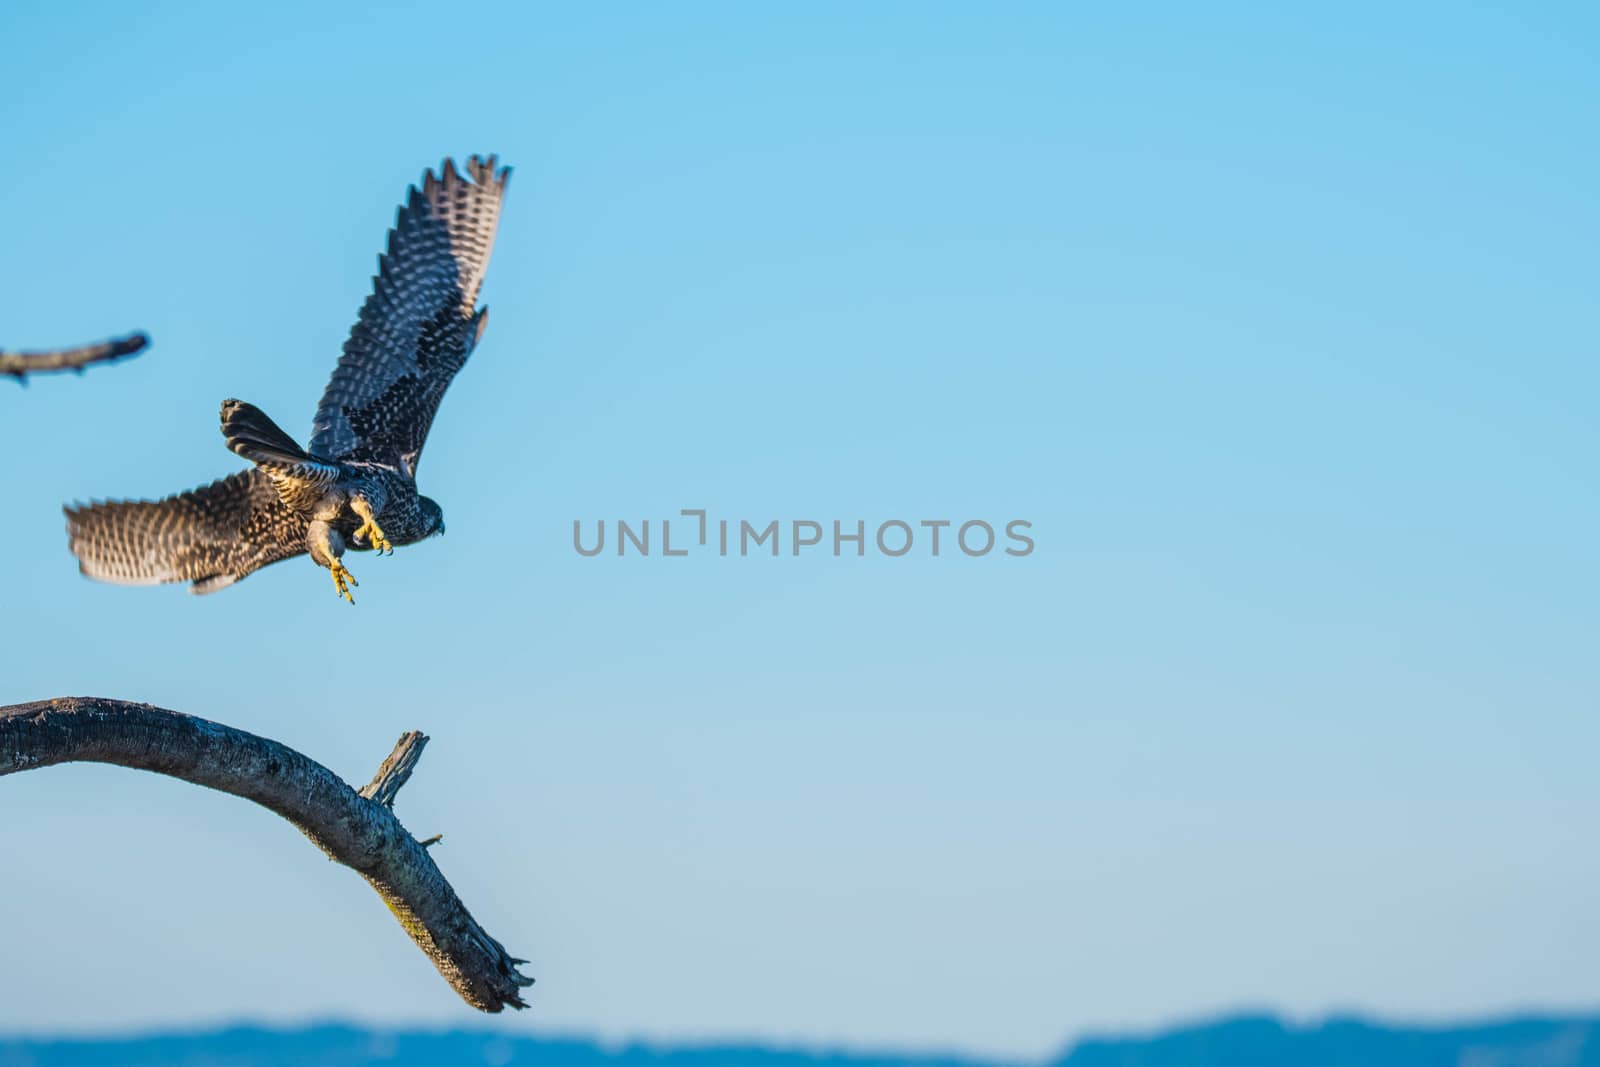 Peregrin Falcon launching ftom branch over Jetty Island Beach